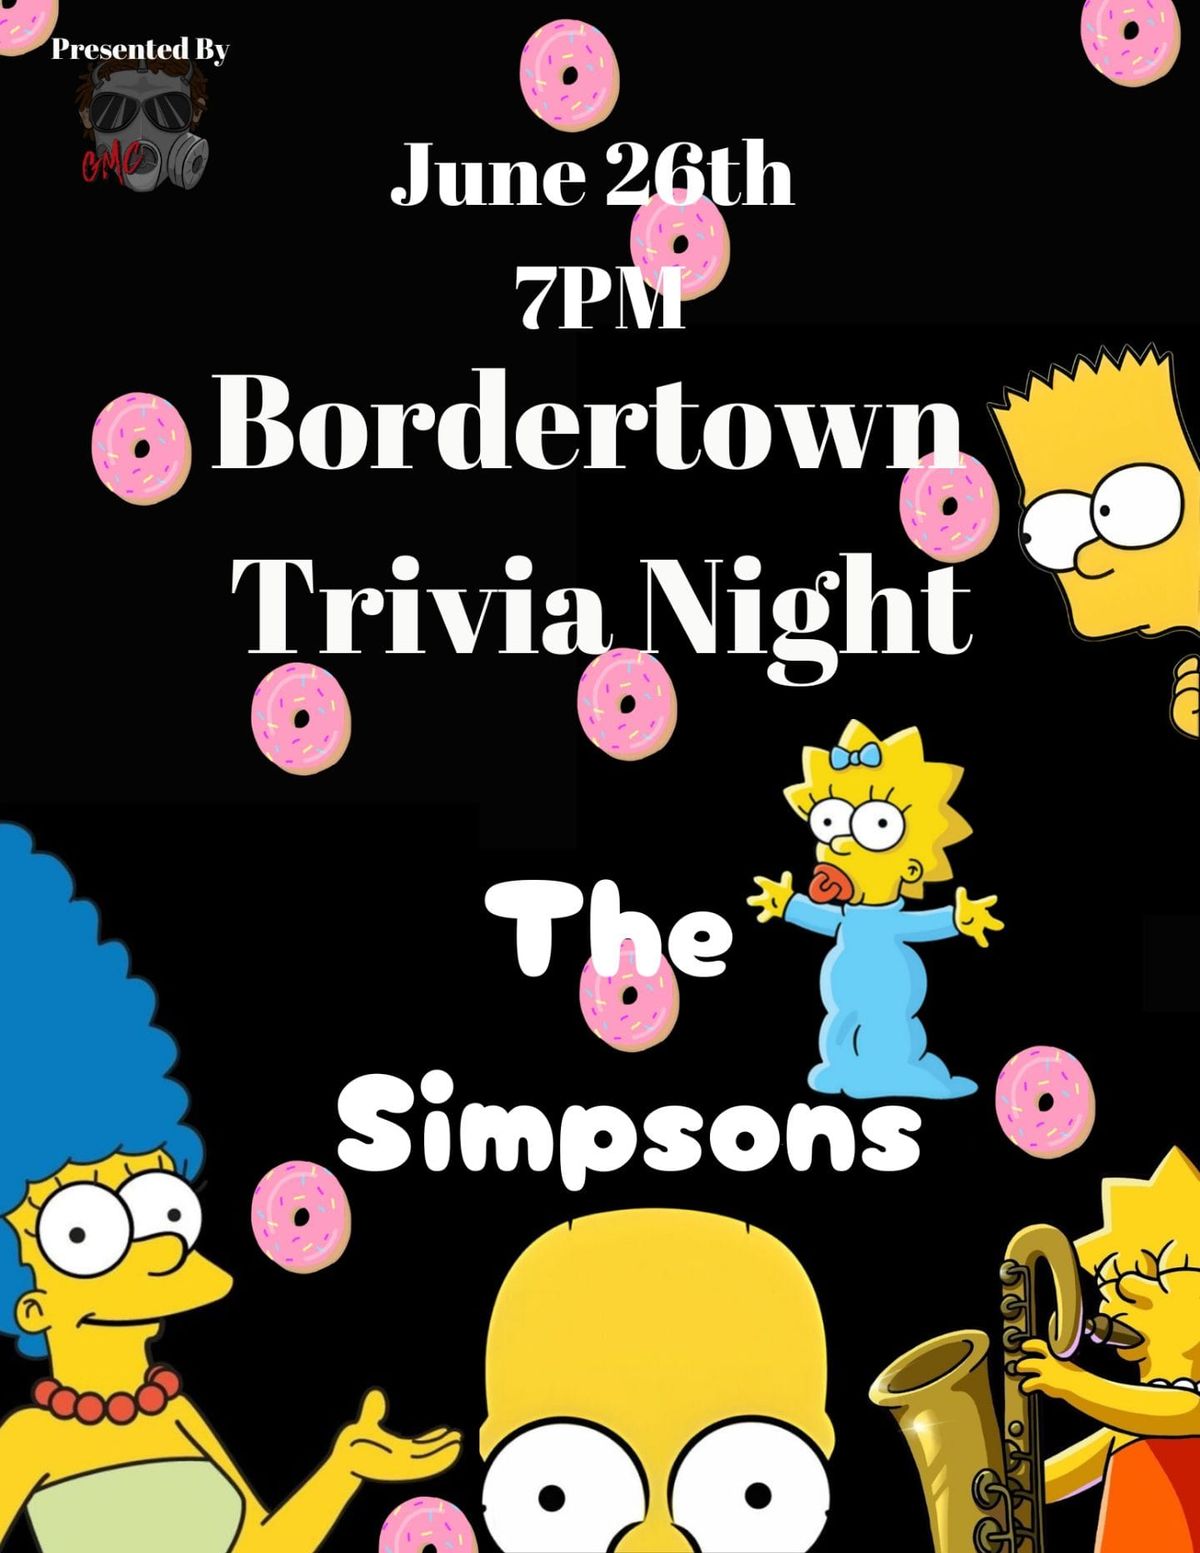 The Simpsons Trivia at BorderTown